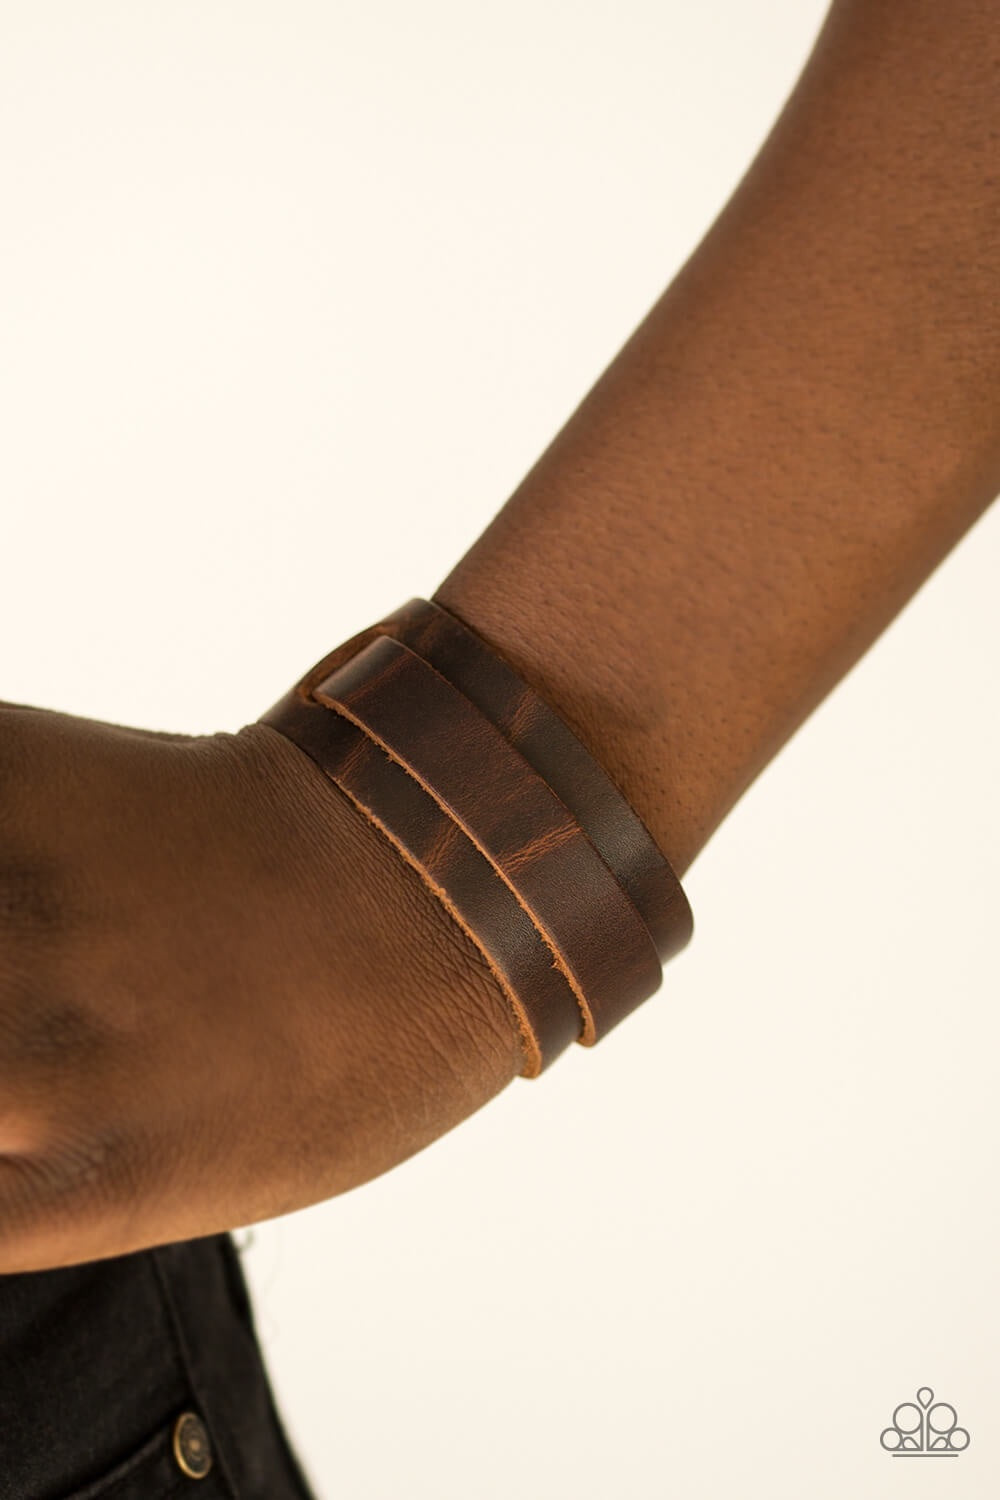 Paparazzi “Road Trip Style” Brown Leather Urban Bracelet